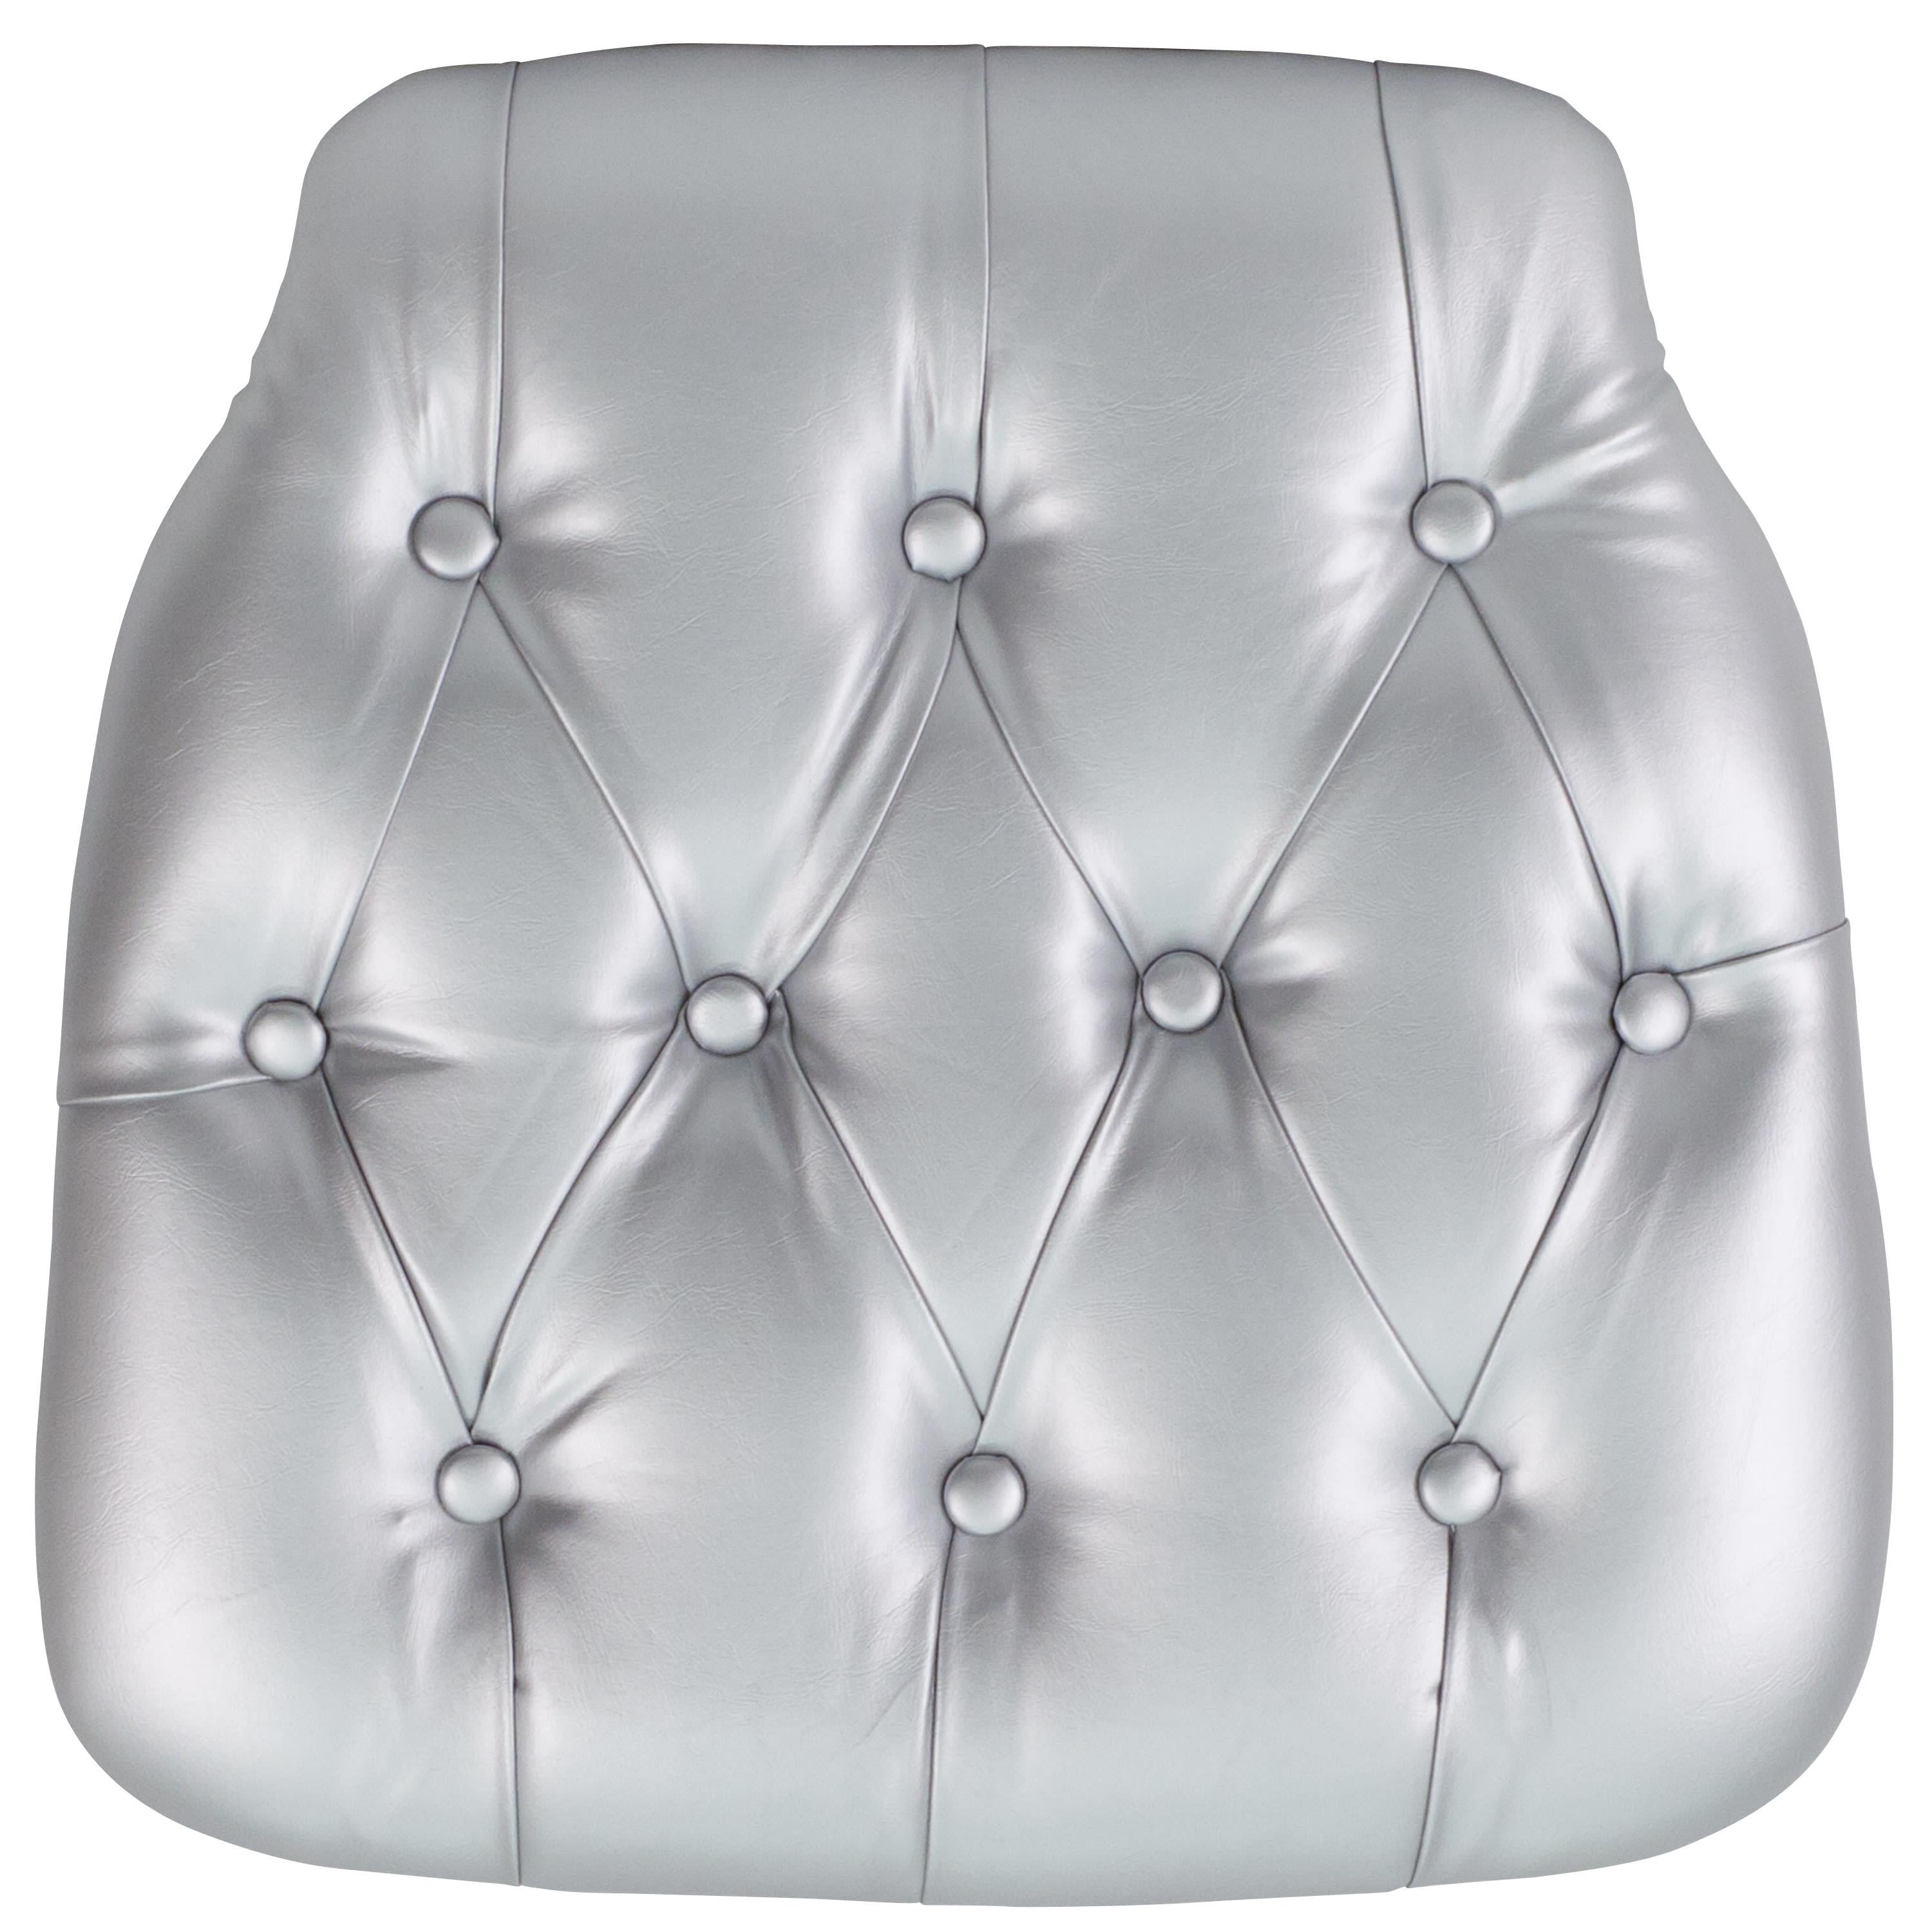 Ivory Extra Thick Chiavari Chair Cushion